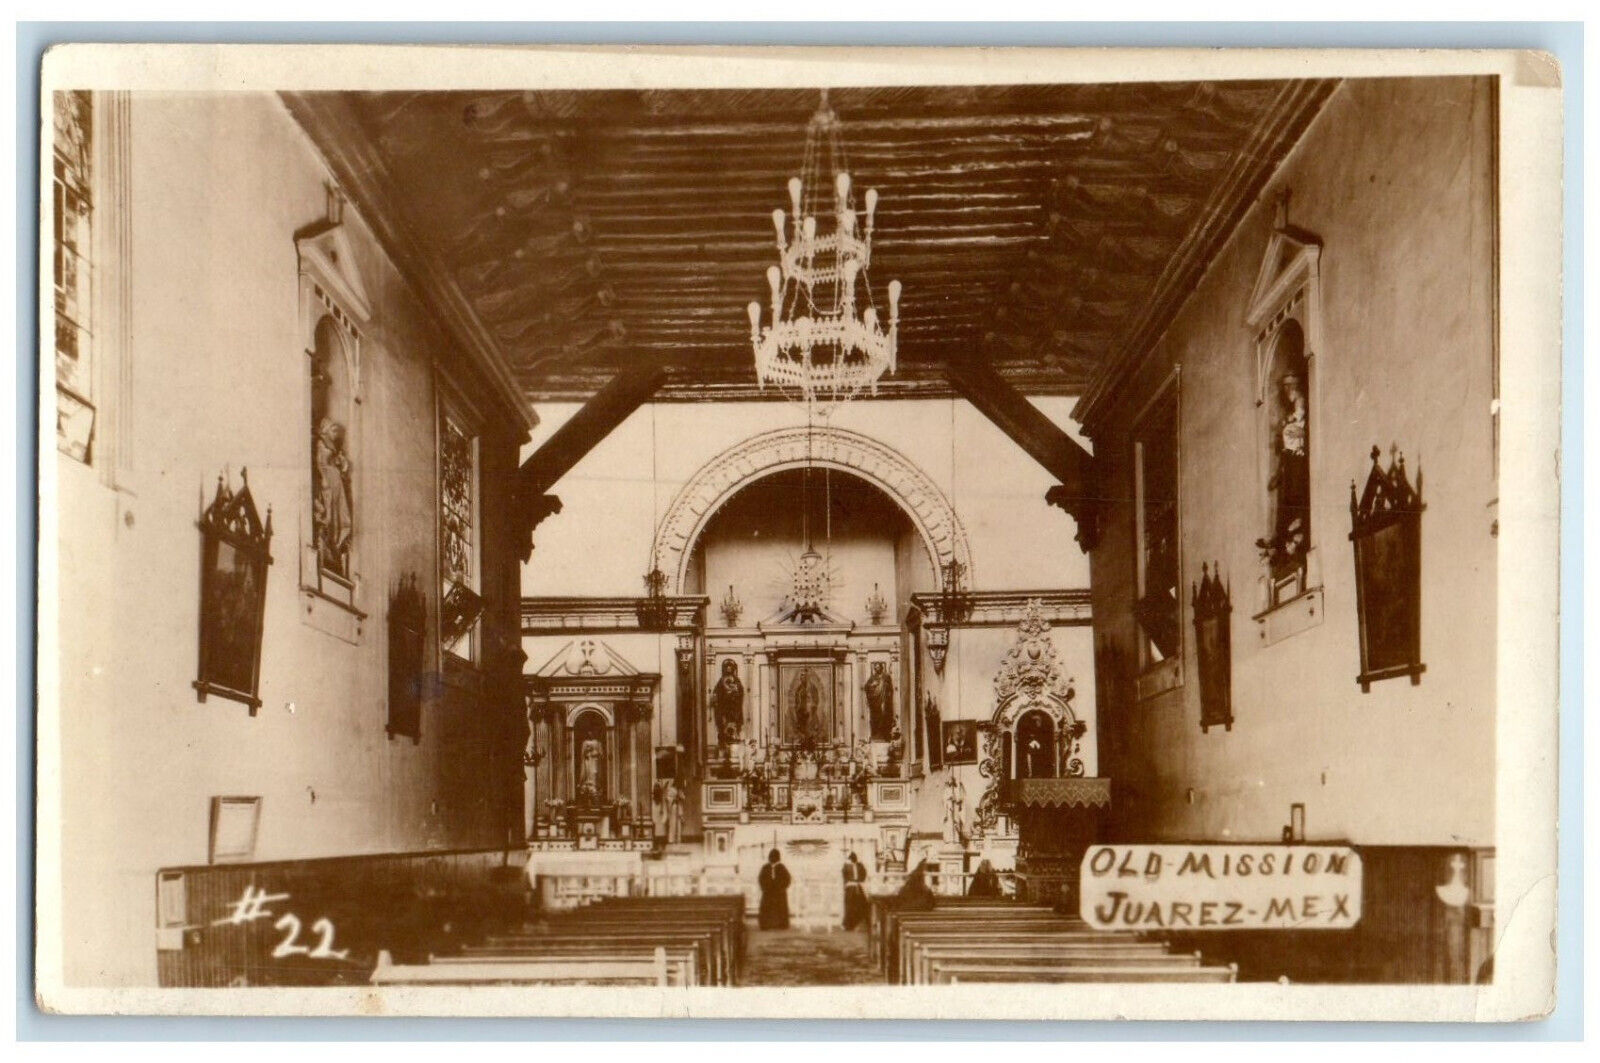 1926 Church Interior Old Mission Juarez Mexico Vintage RPPC Photo Postcard